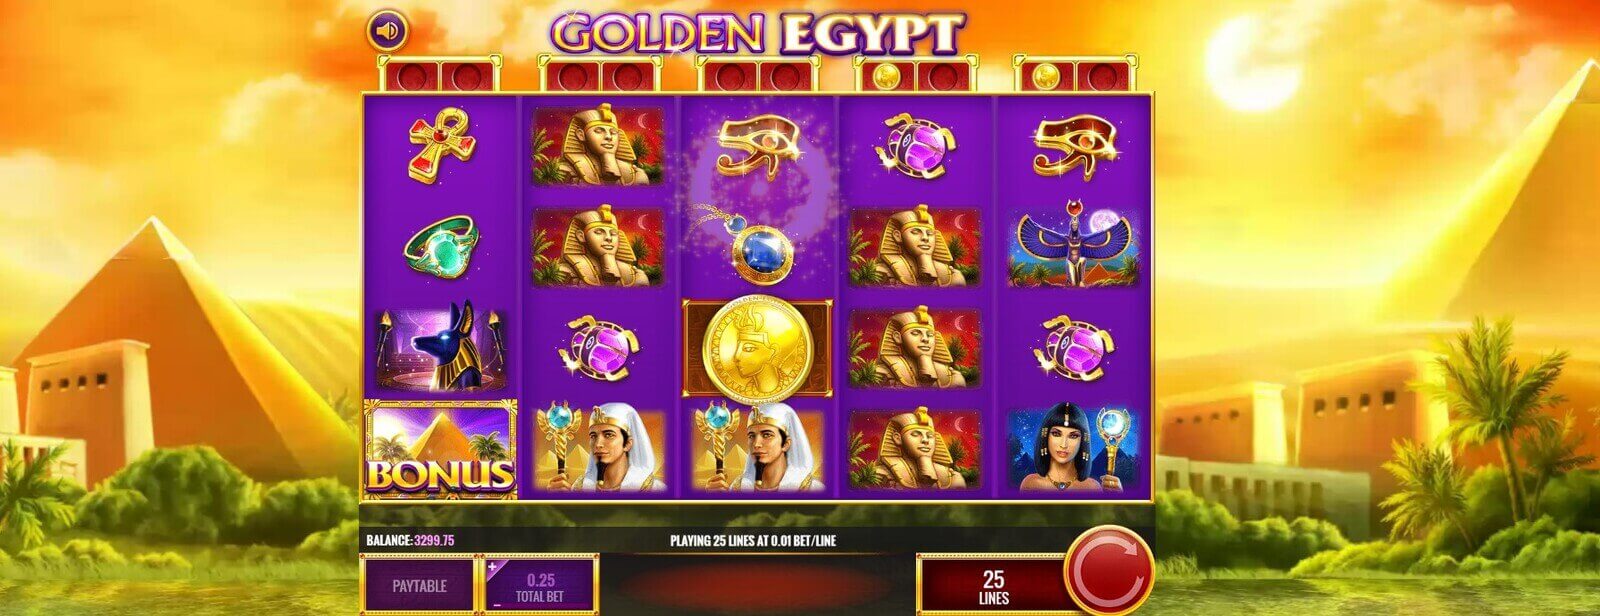 Tragamonedas Golden Egypt de IGT